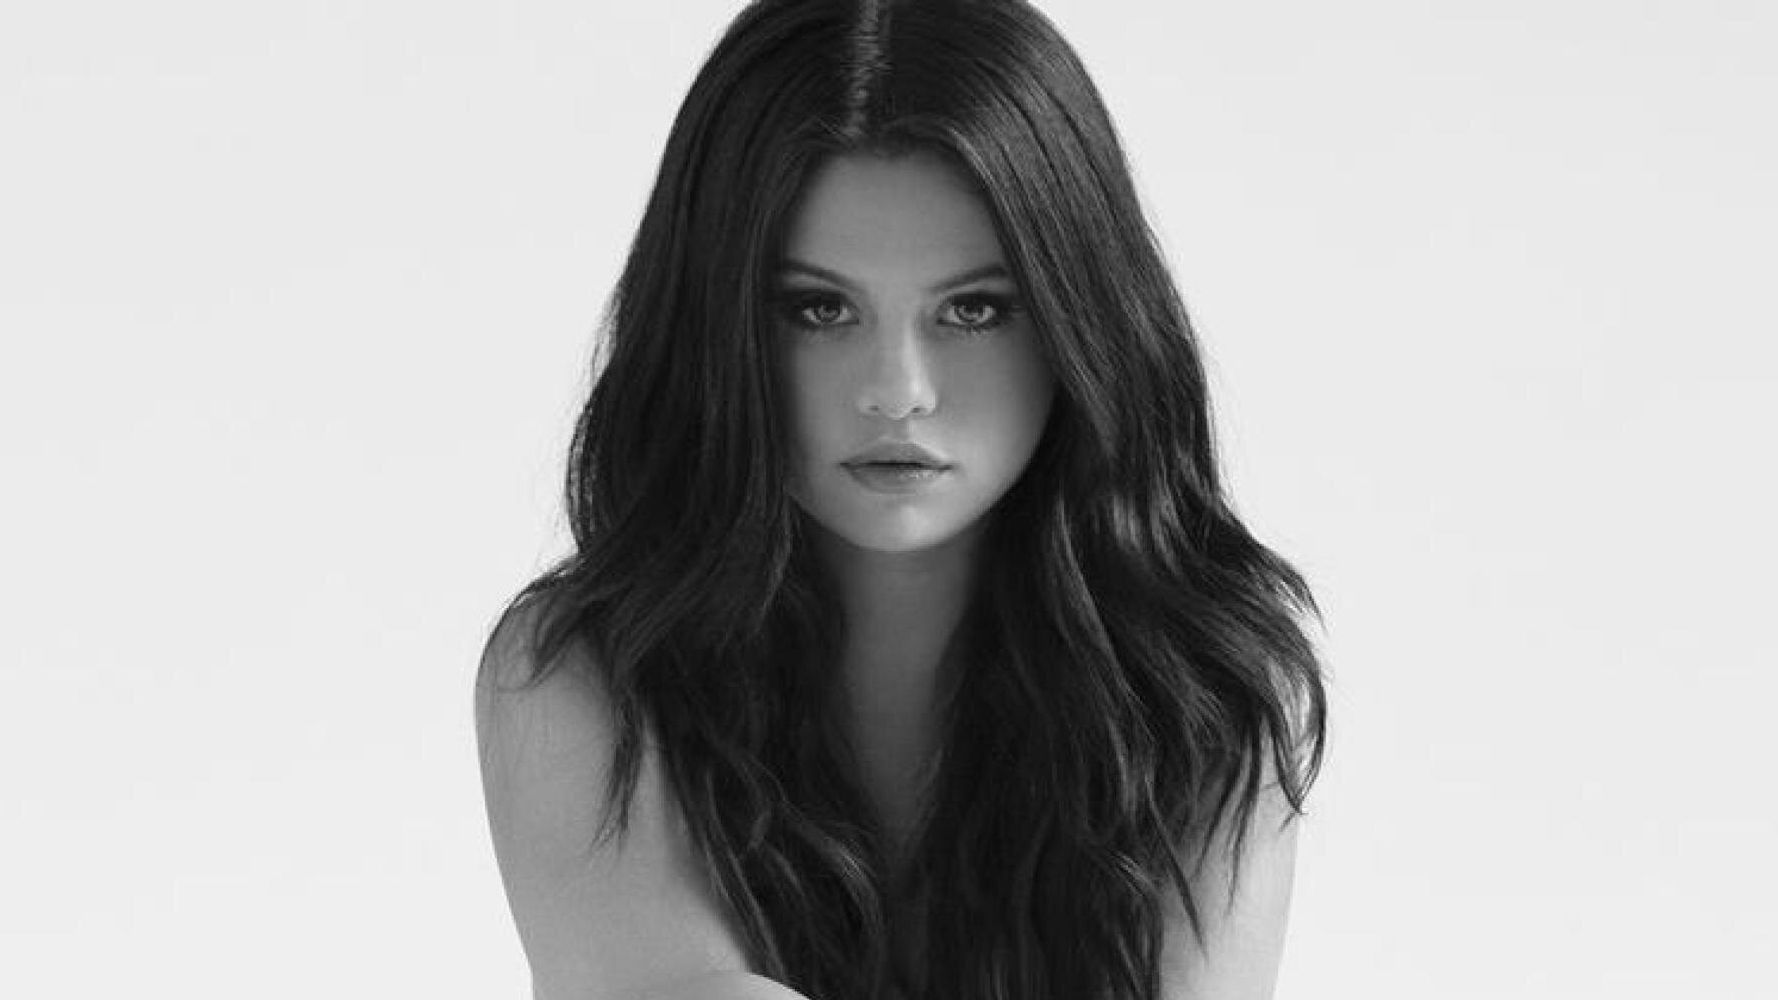 Selena Gomez Reveals Nude Album Cover For New Release Revival Pics Huffpost Uk Entertainment 4229